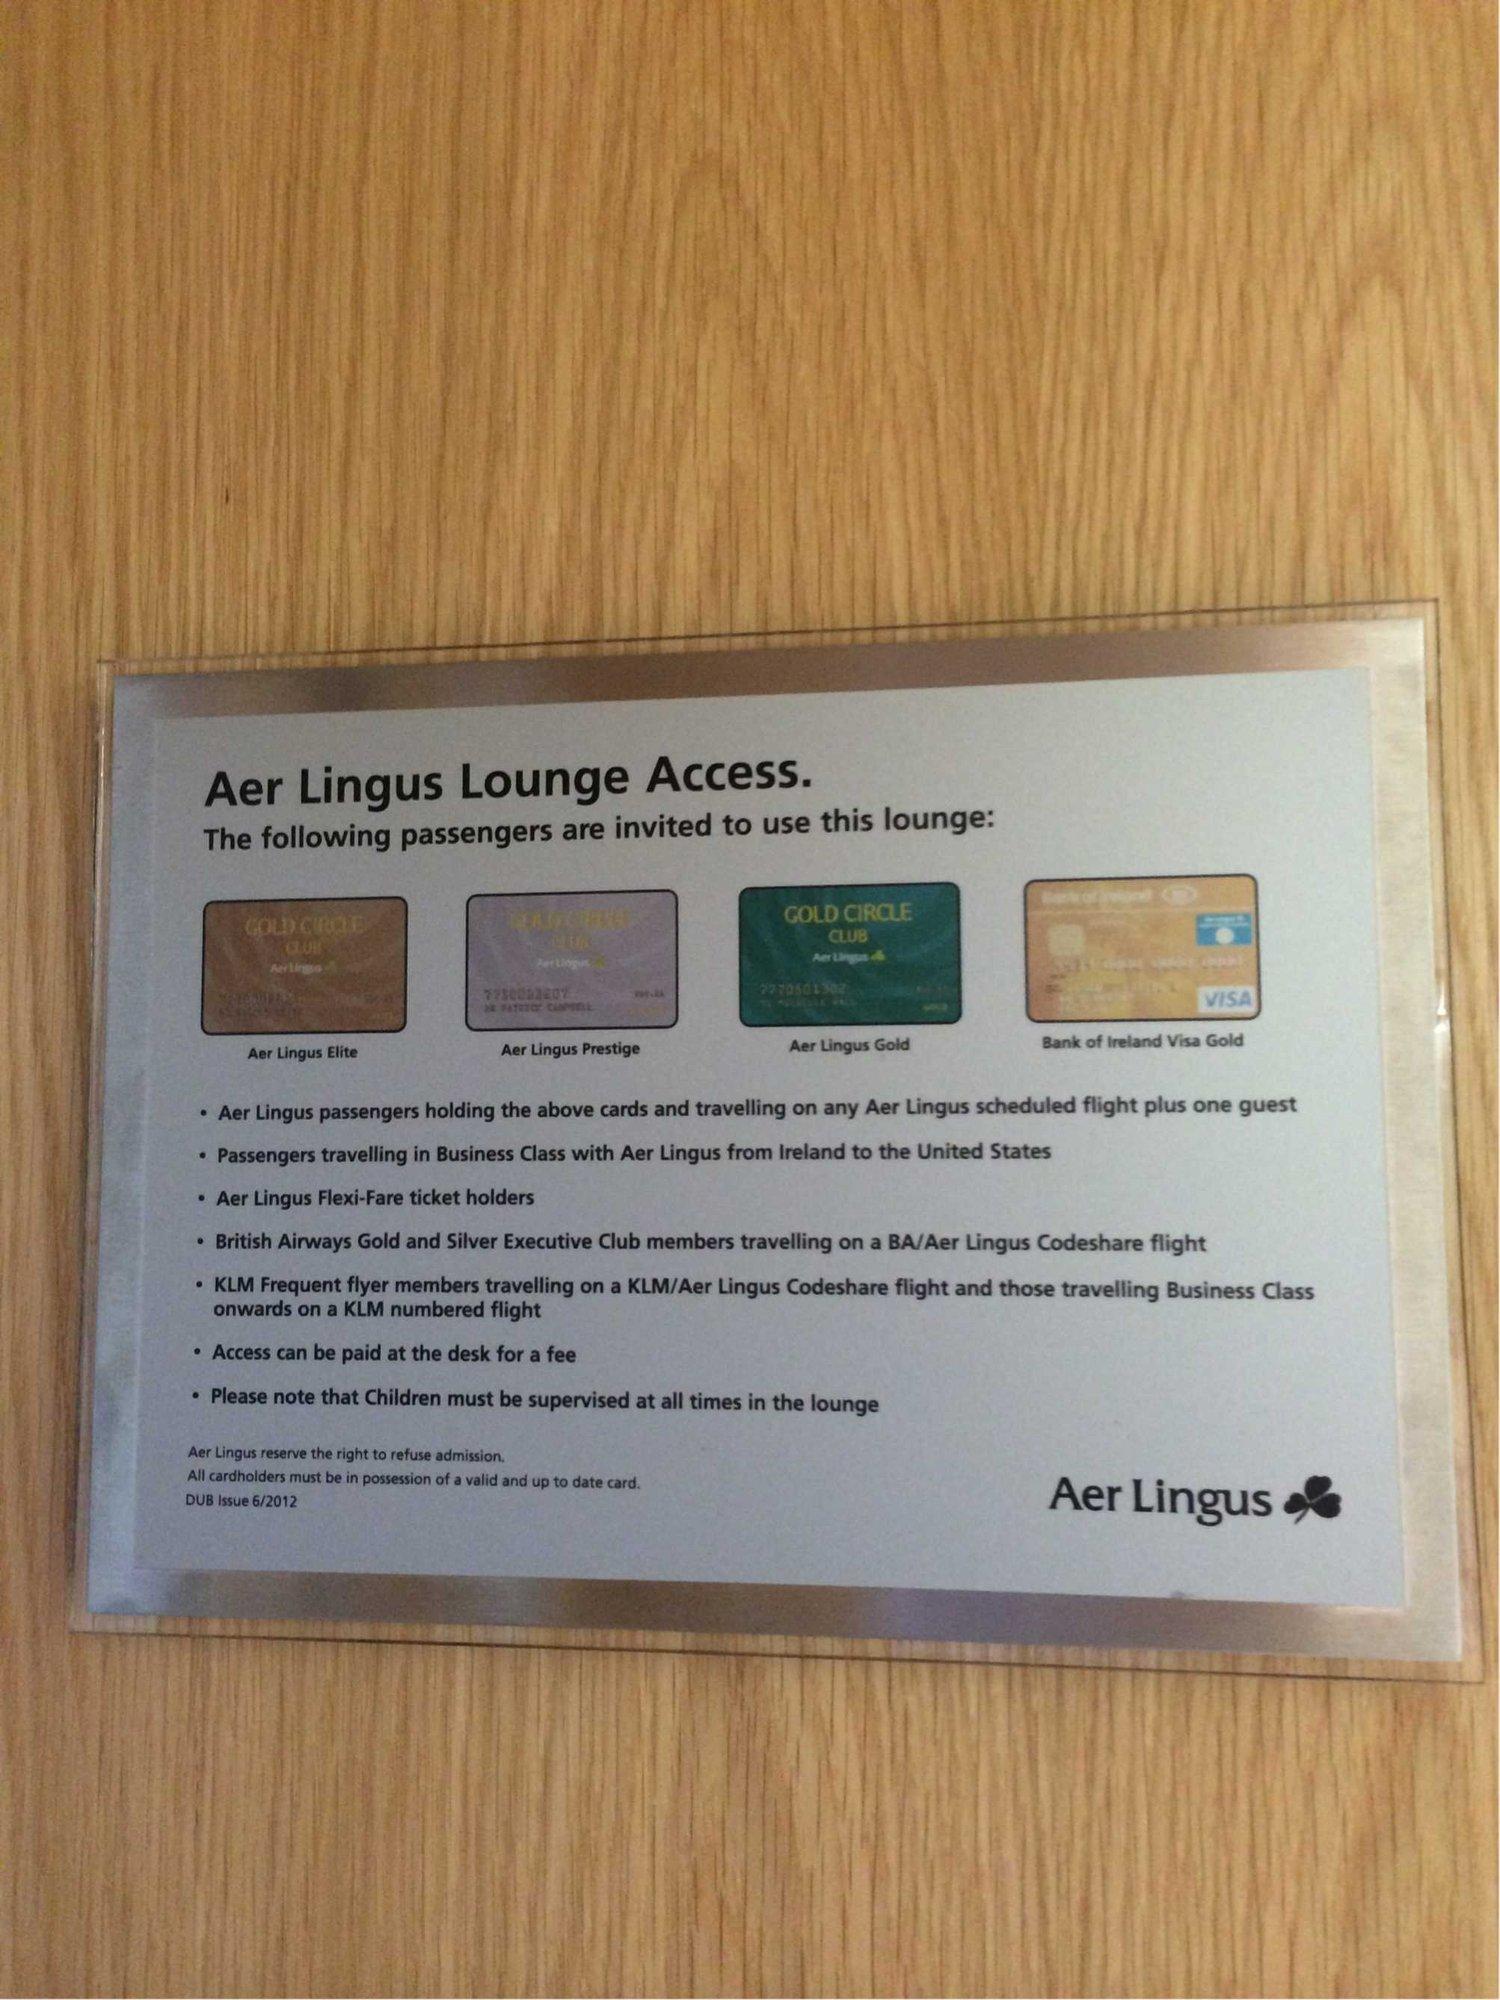 Aer Lingus Lounge image 5 of 10